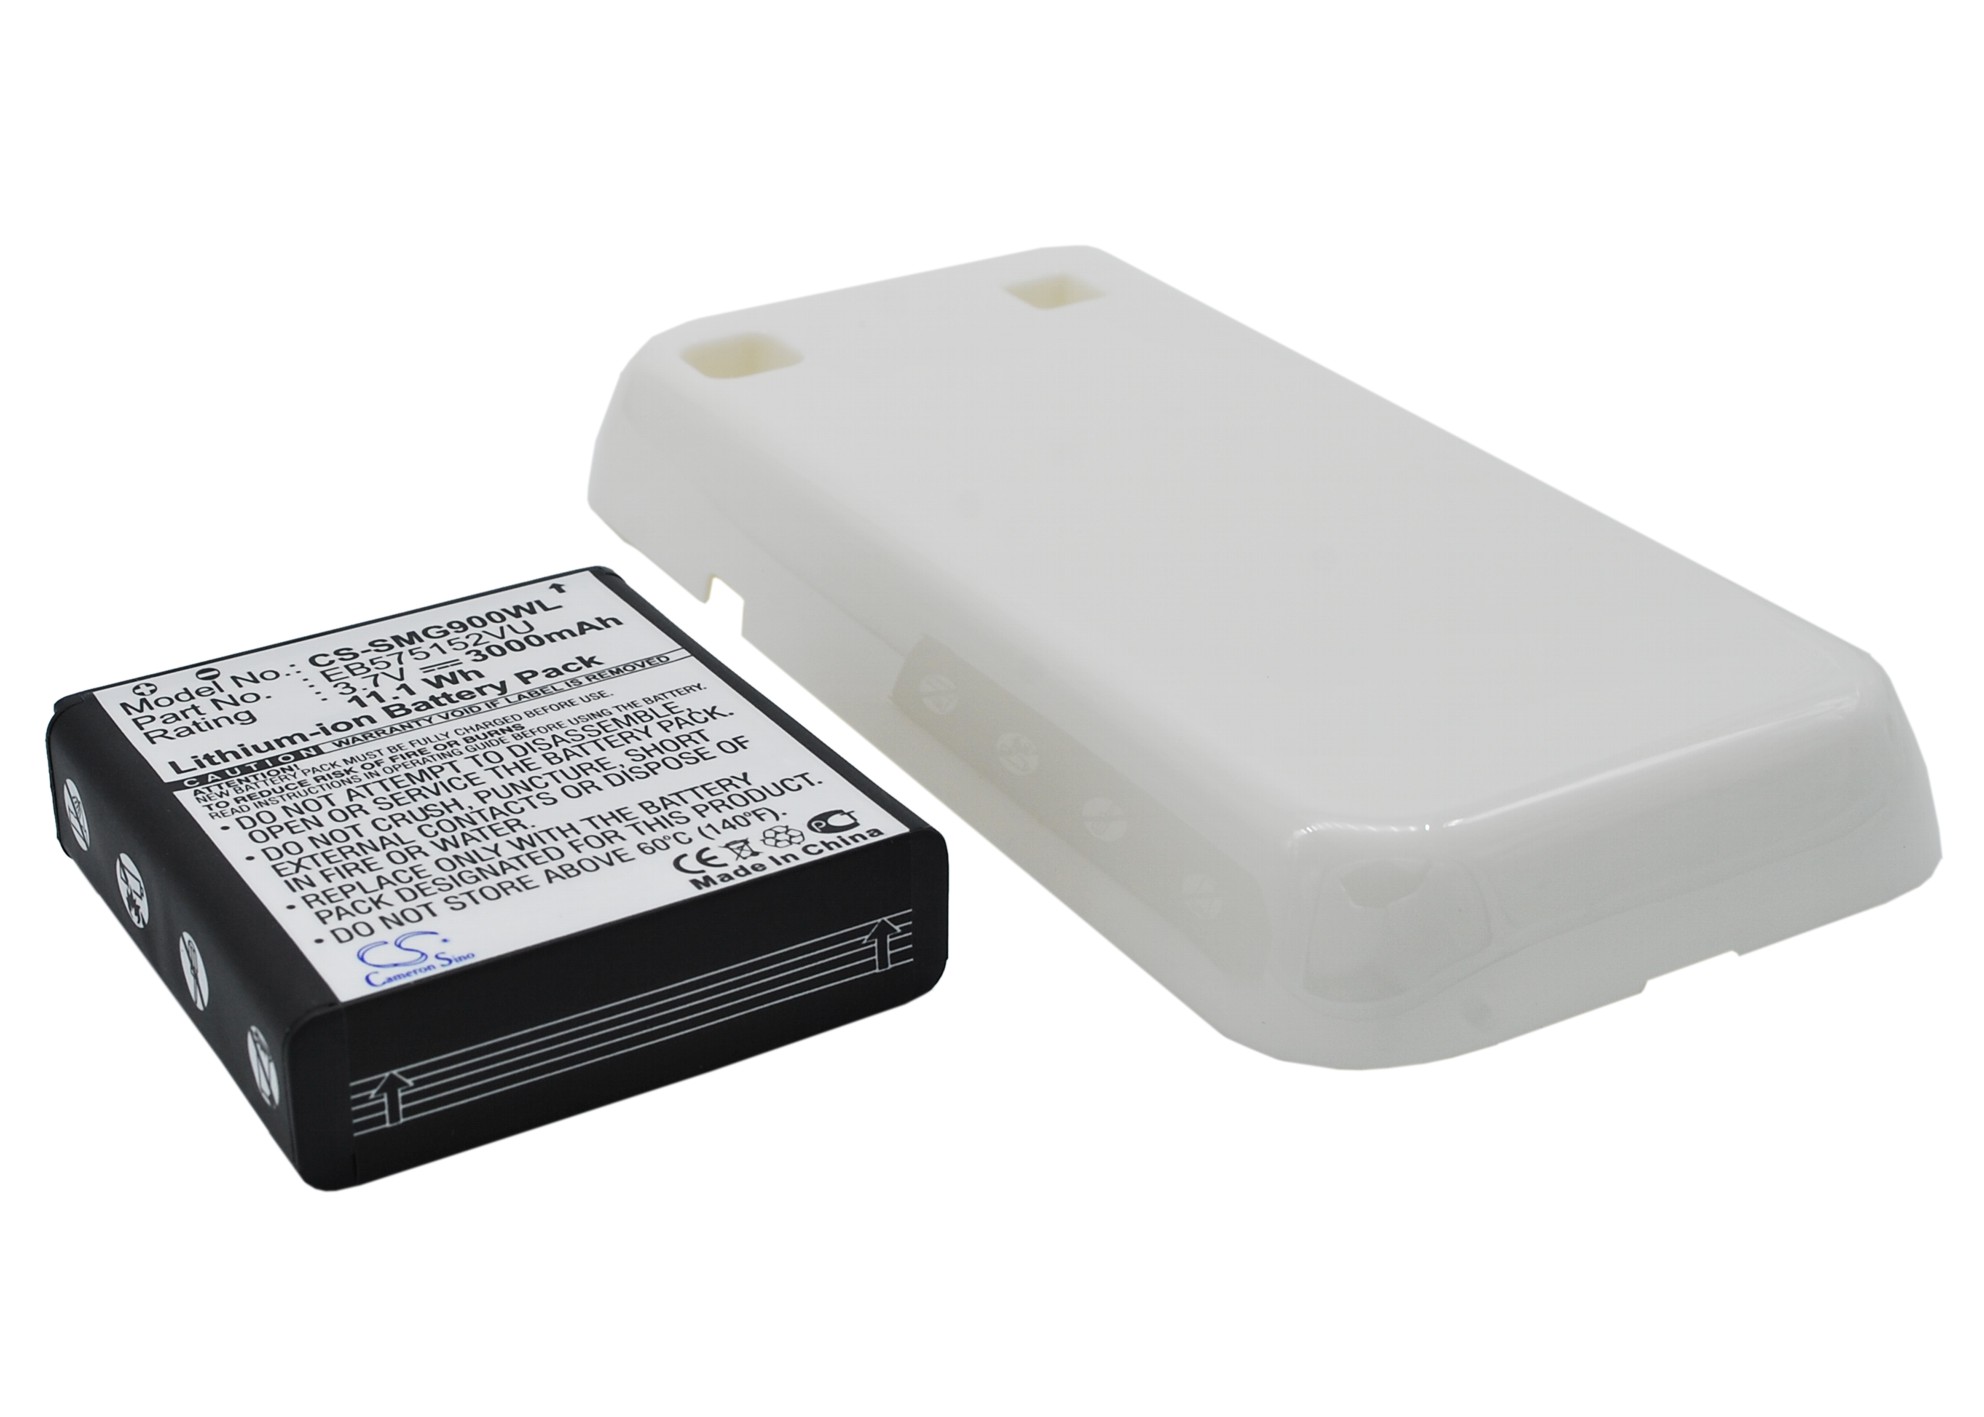 Oriënteren uitspraak voelen Li-ion Battery for Samsung Galaxy S Galaxy S PLUS GT-9001 3.7V 3000mAh |  eBay